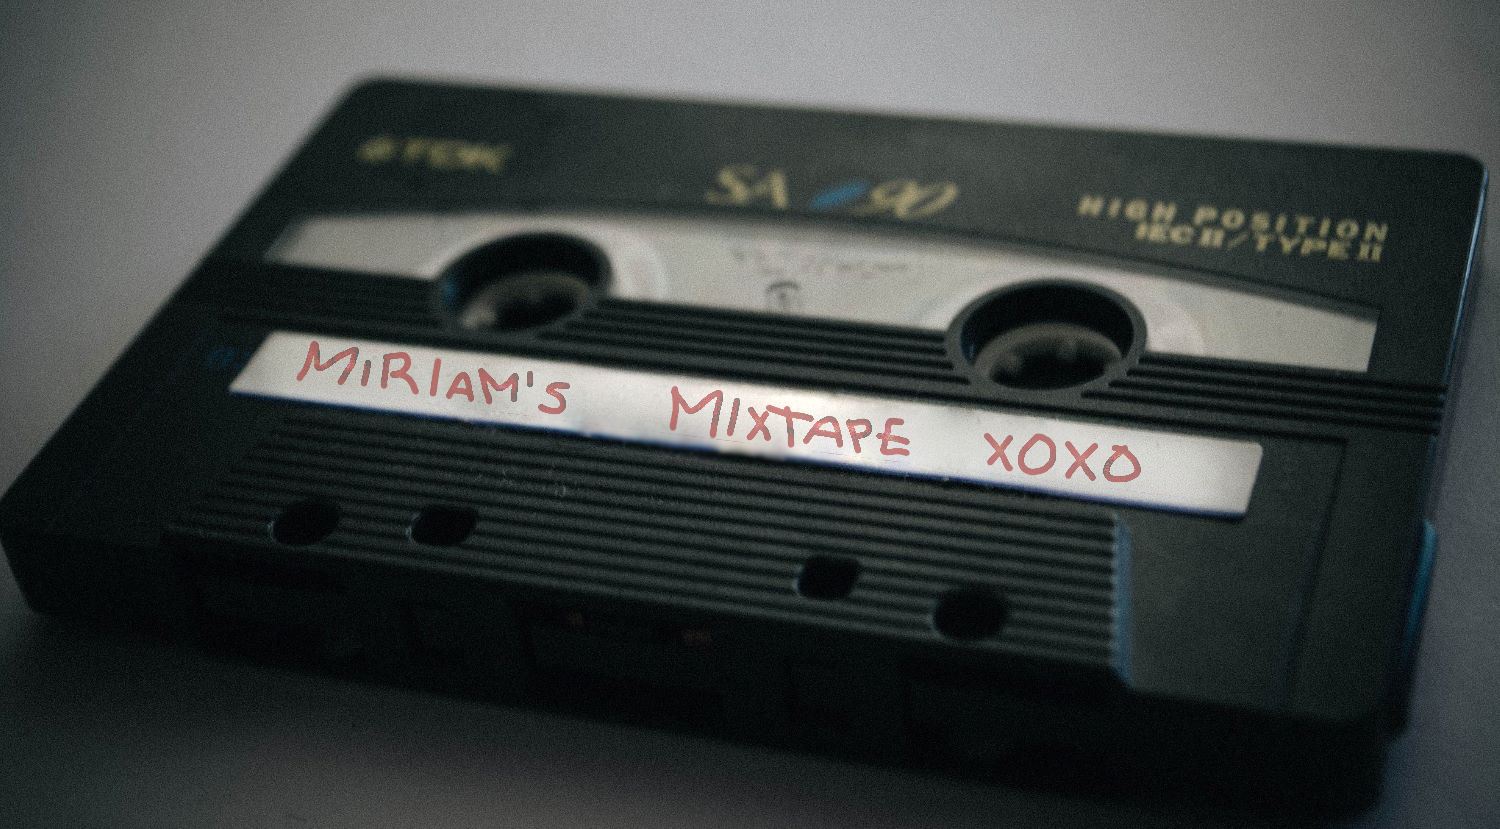 Cassette tape that says "Miriam's Mixtape XOXO."